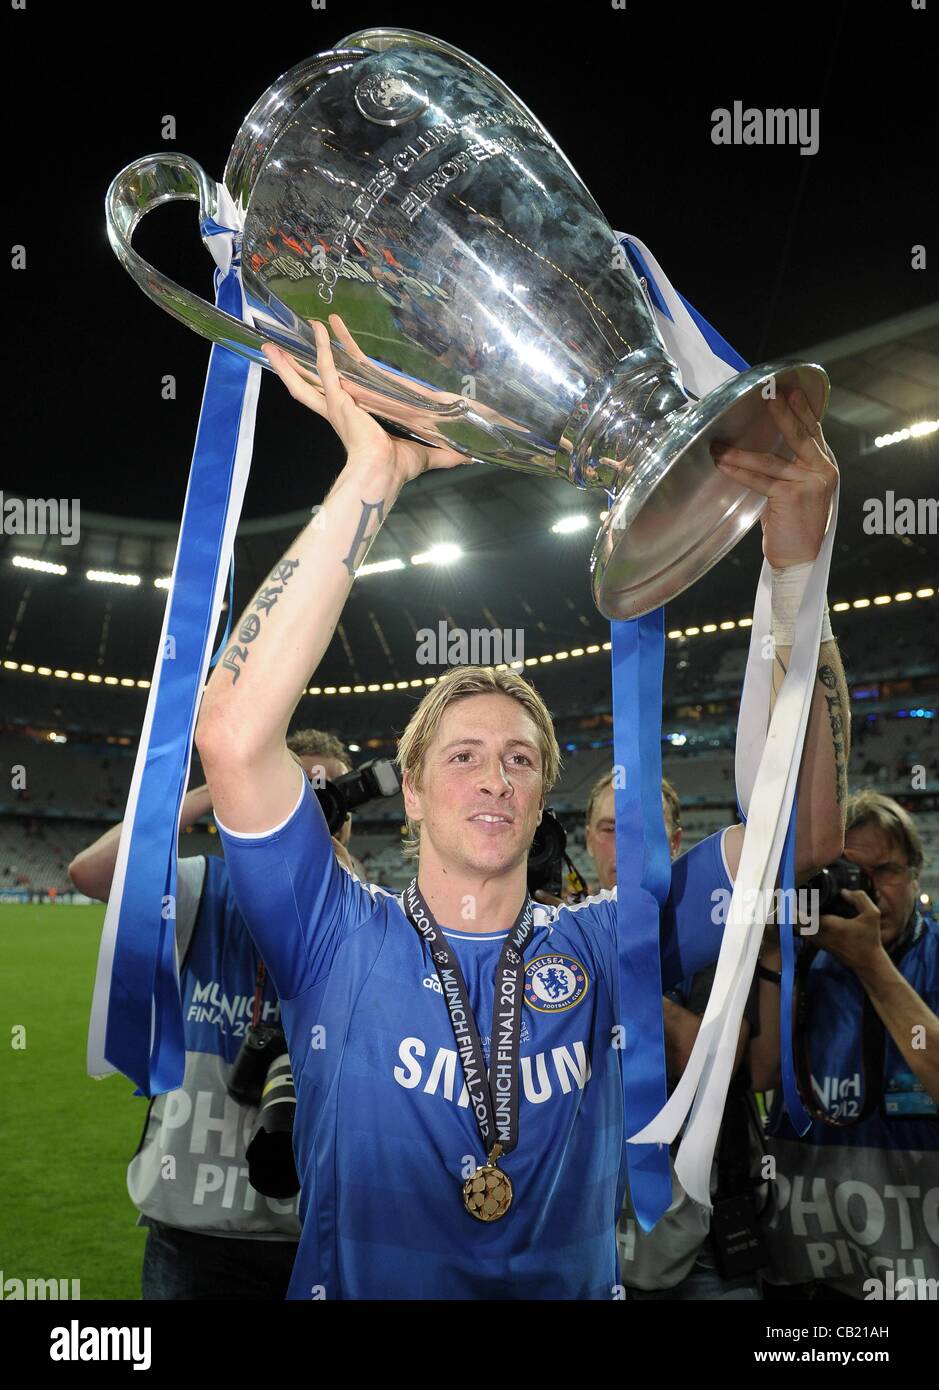 Fernando Torres remembers Chelsea's 2012 Champions League triumph ahead of  final return - Mirror Online